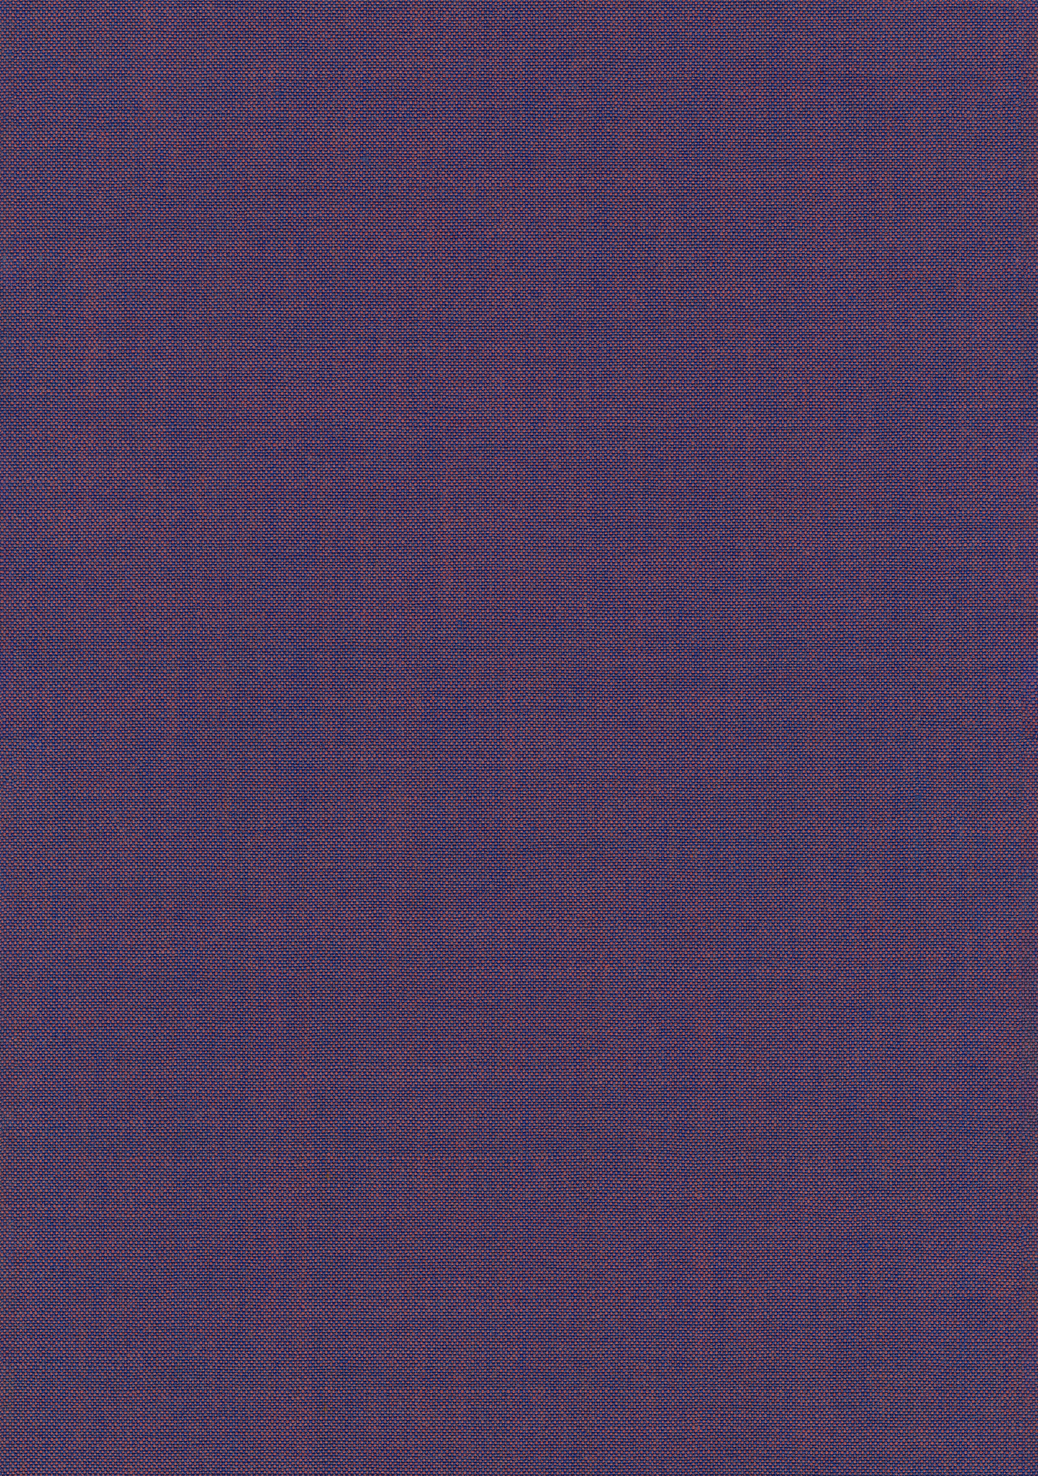 Fabric sample Remix 3 686 purple